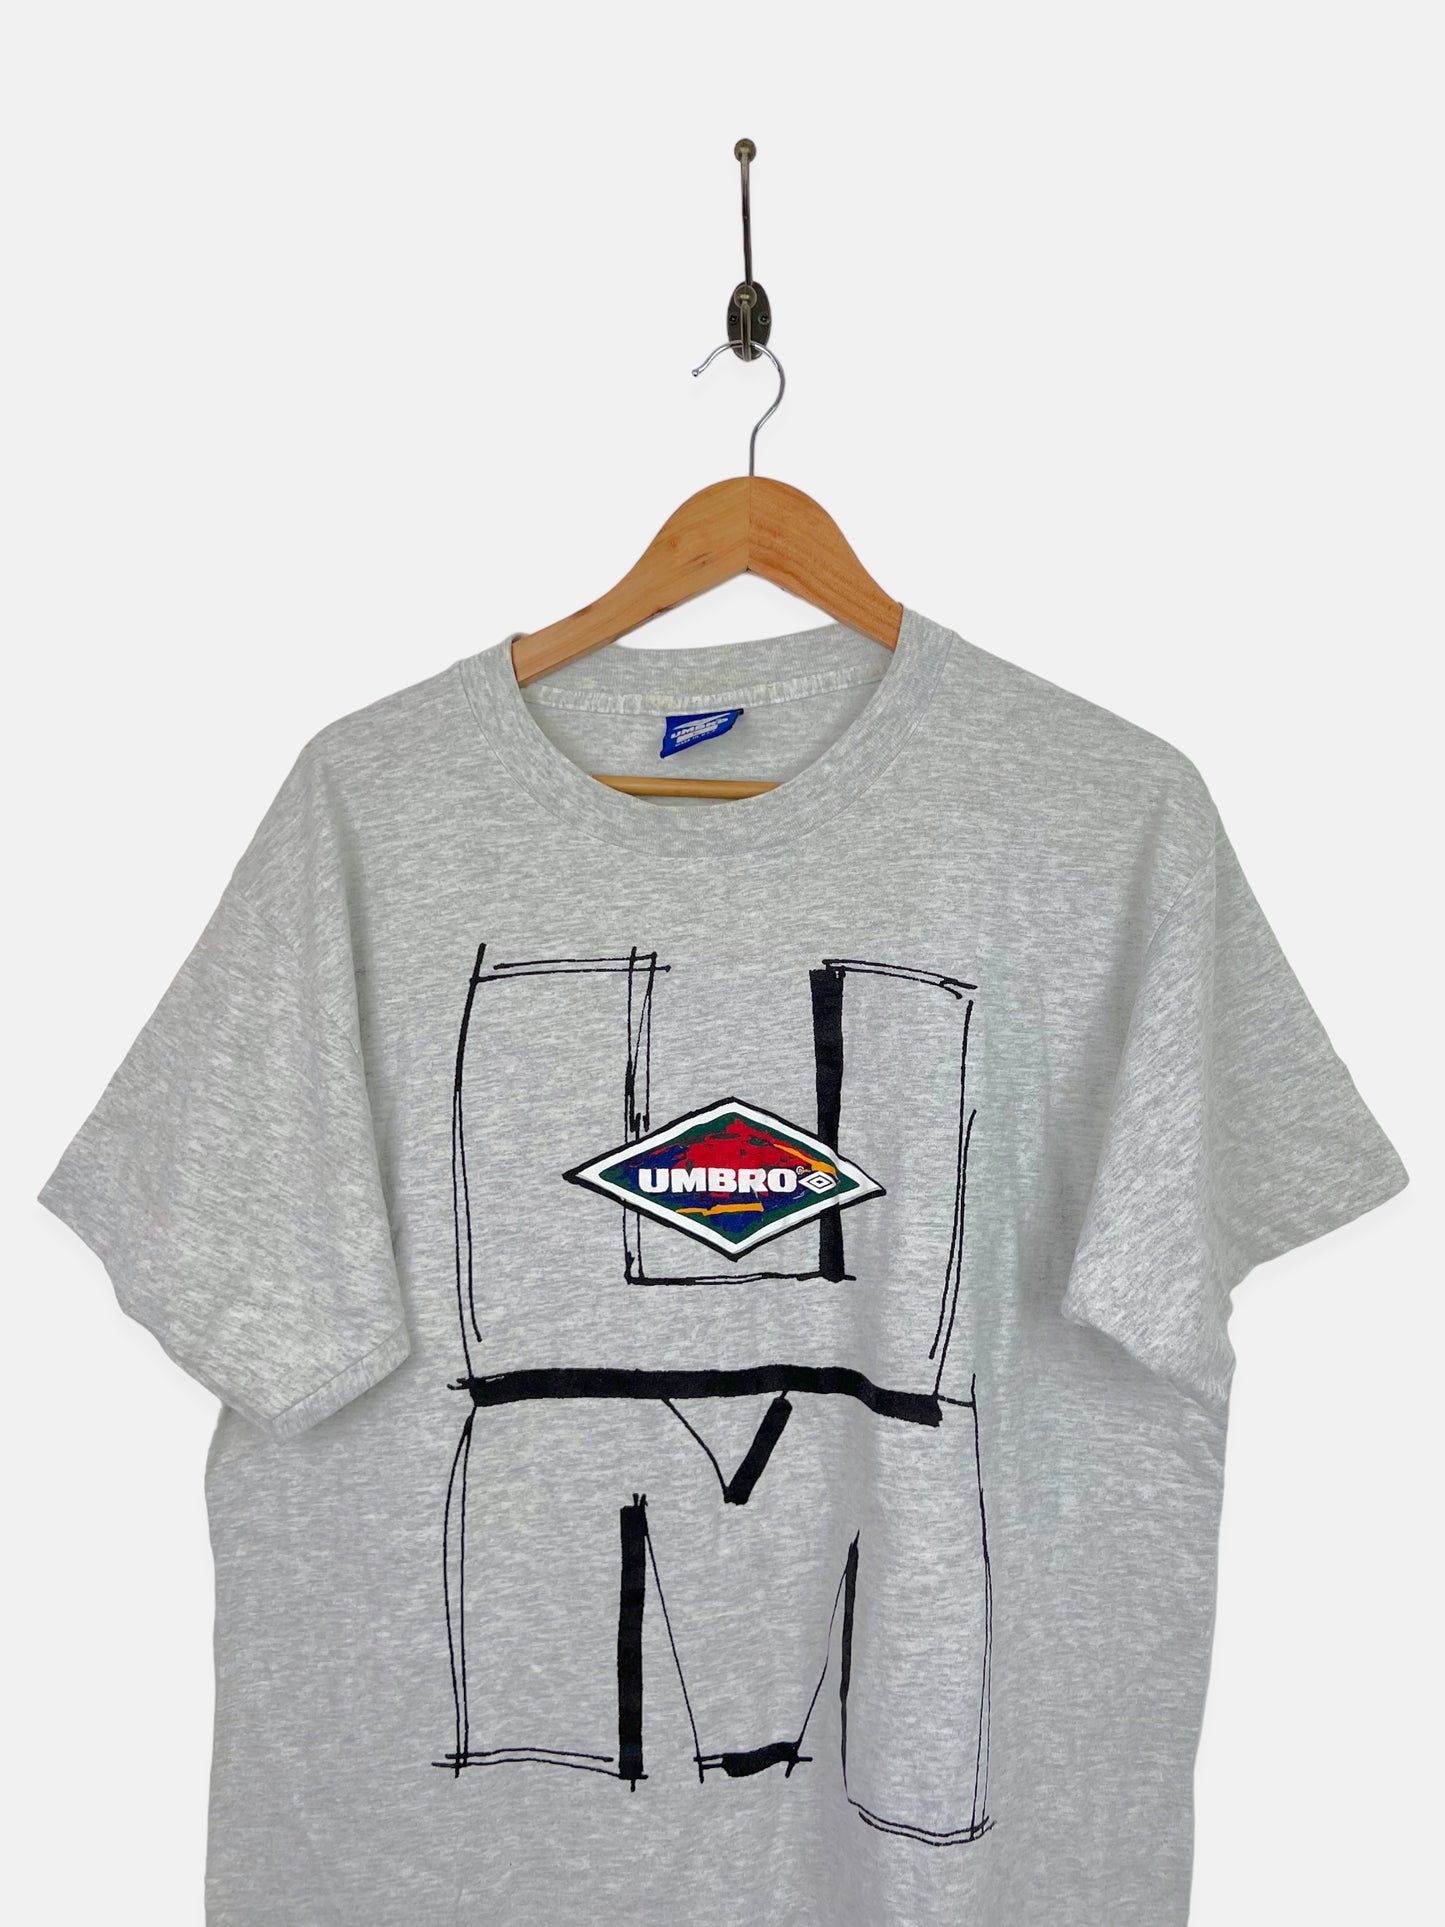 90's Umbro USA Made Vintage T-Shirt Size L